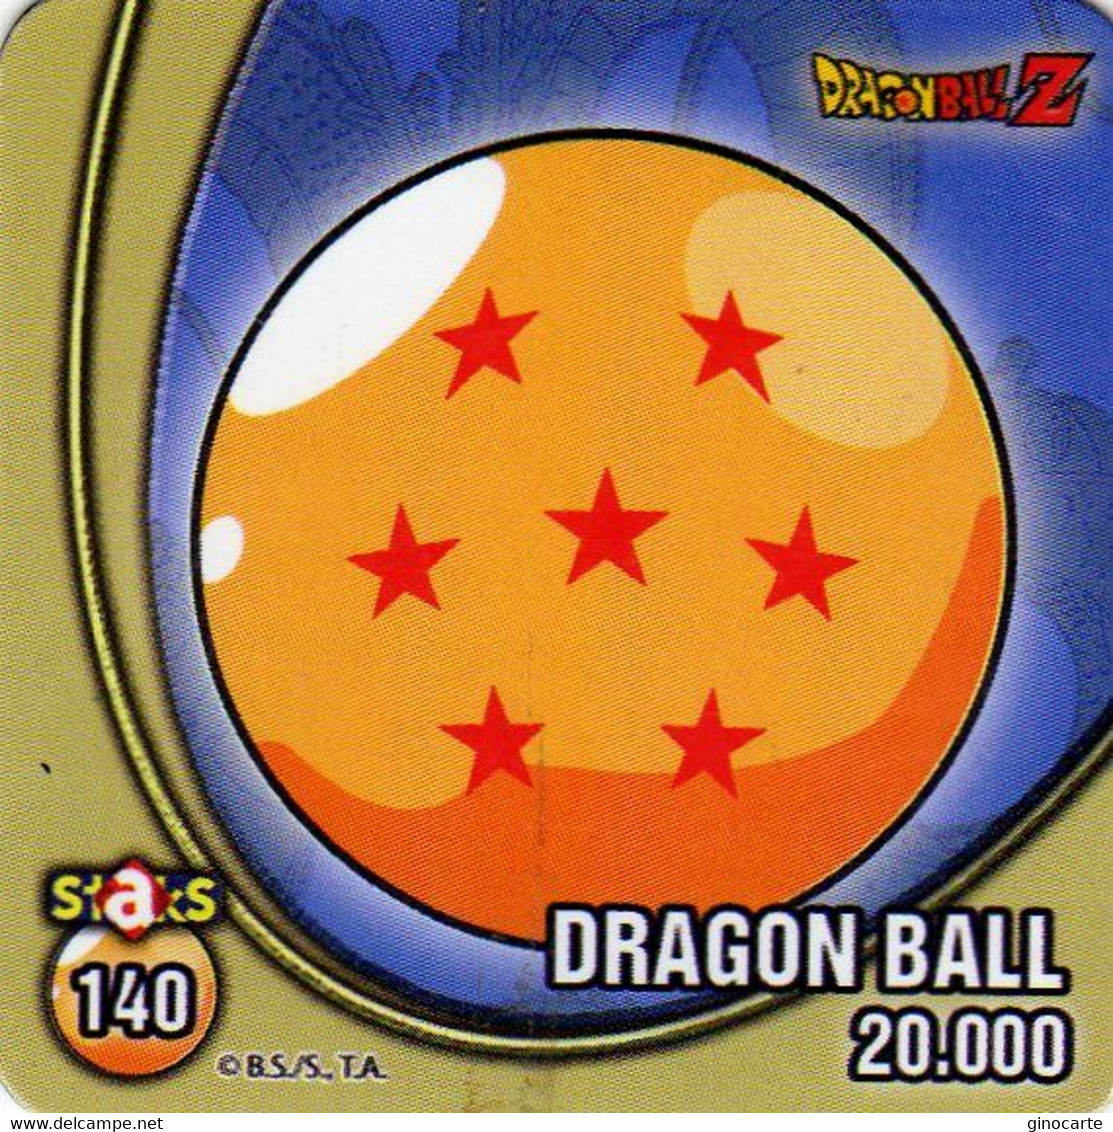 Magnets Magnet Stacks Dragon Ball Dragonball 140 - Characters